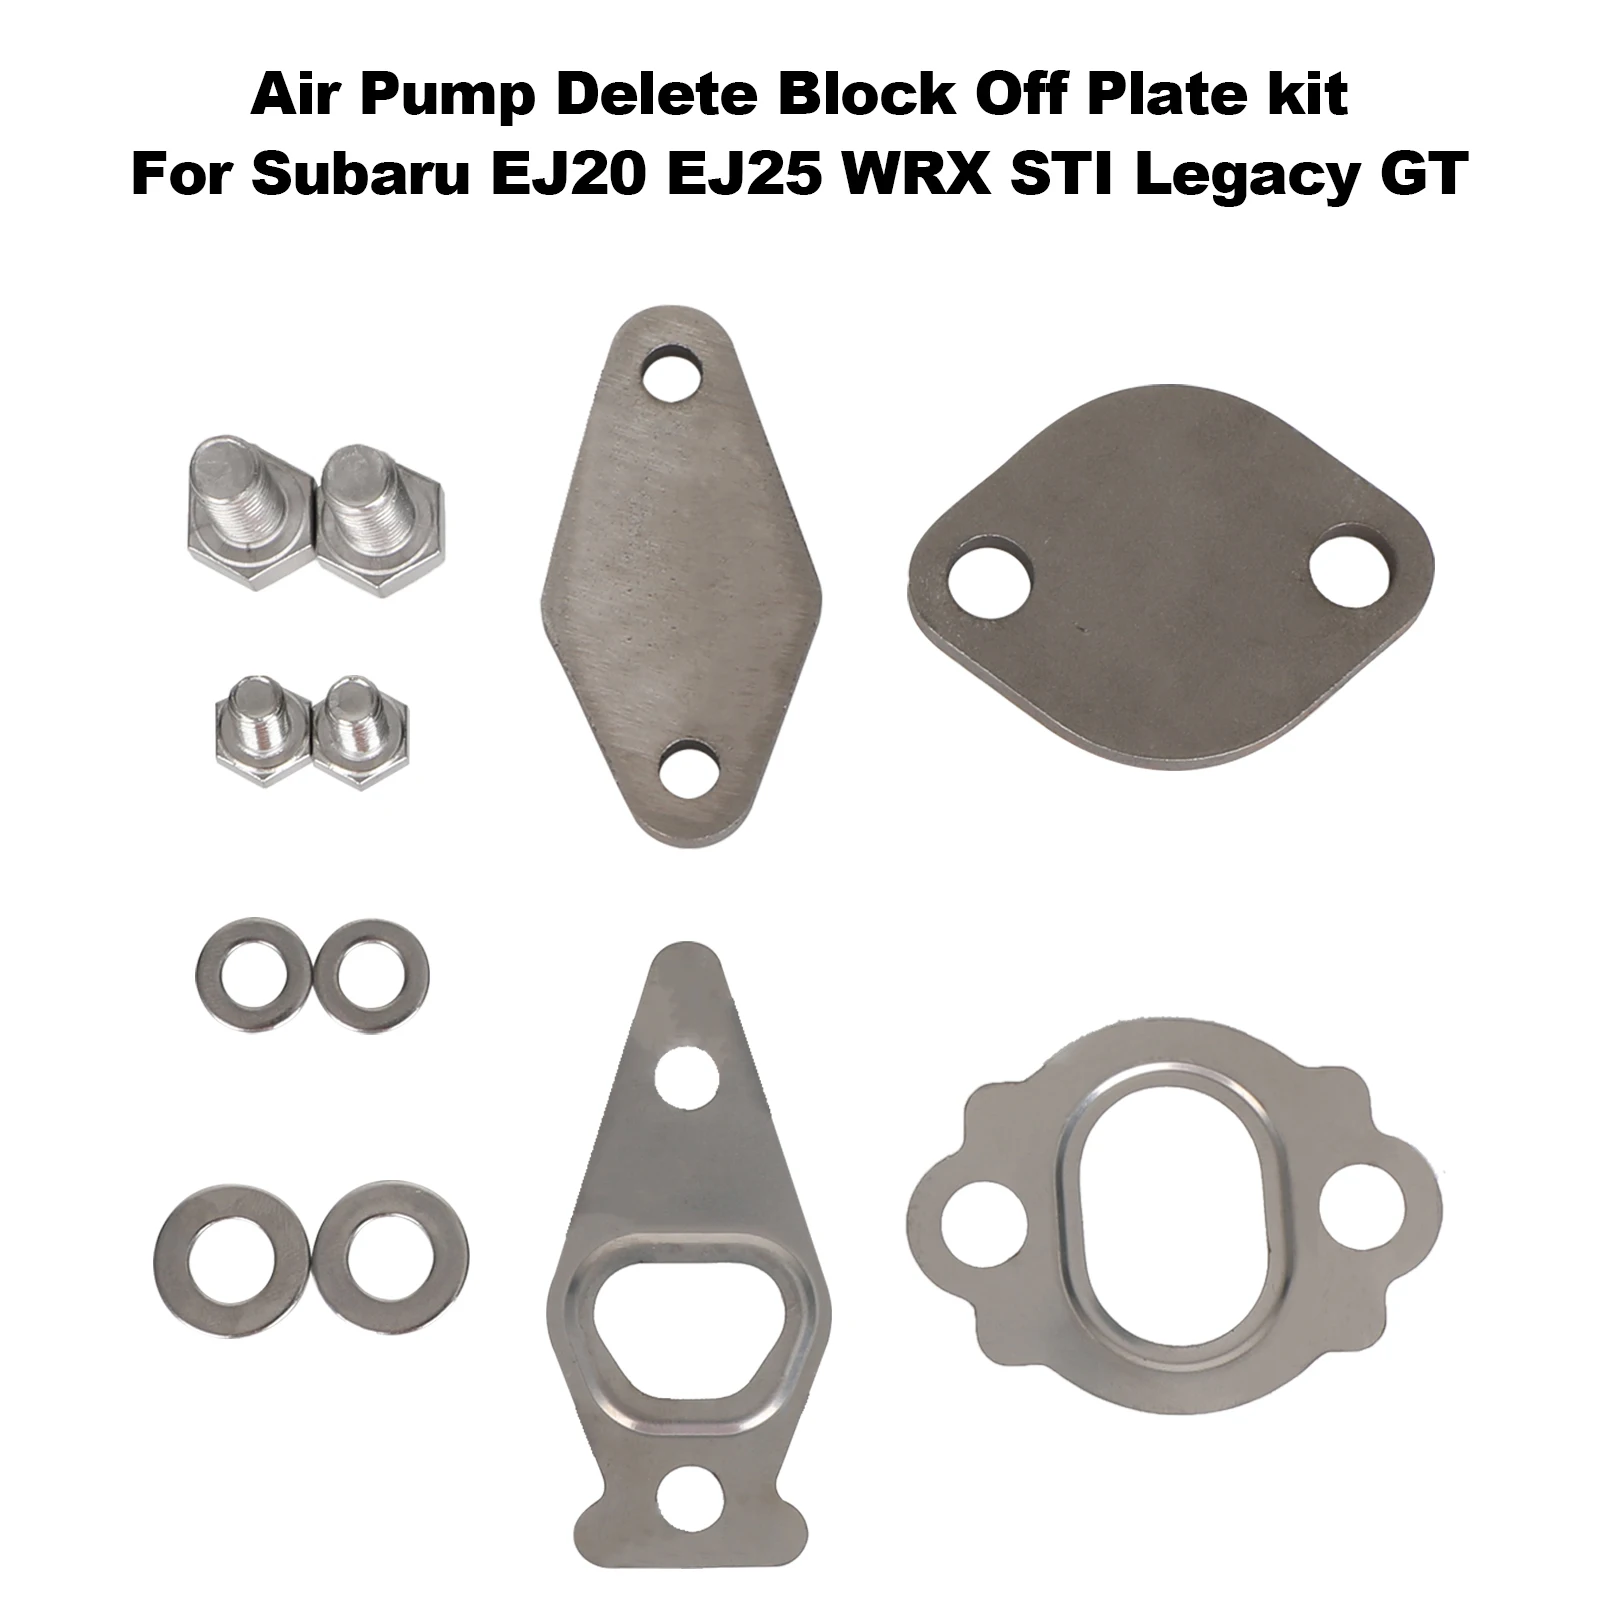 Areyourshop Air Pump Delete Block Off Plate kit for Subaru EJ20 EJ25 WRX STI Legacy GT